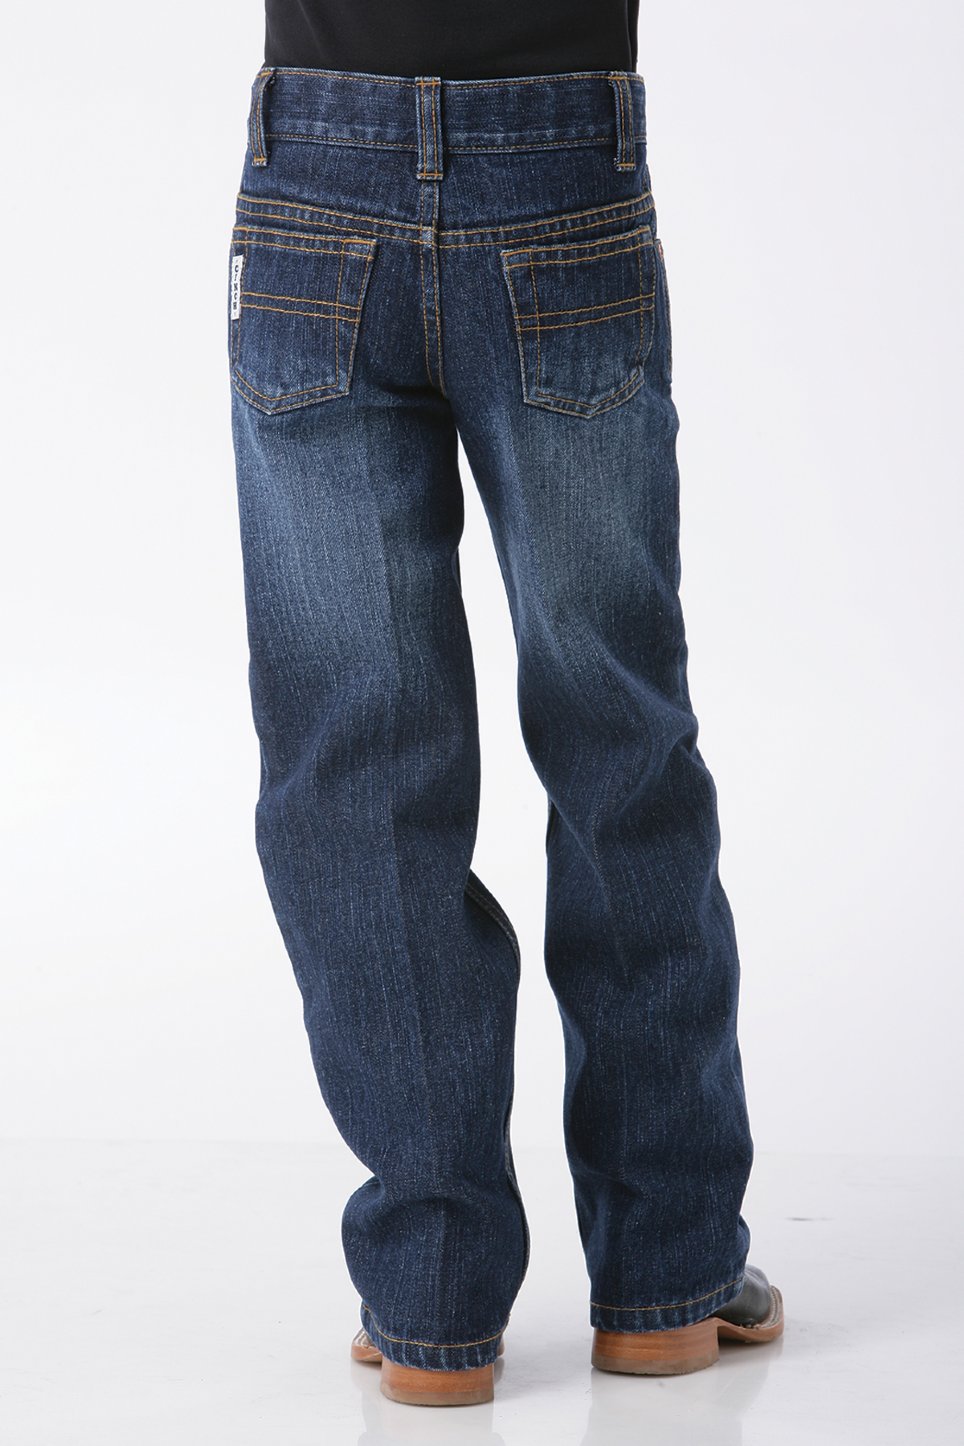 Cinch Jeans  Boy's Cinch Rodeo Cap - Multi